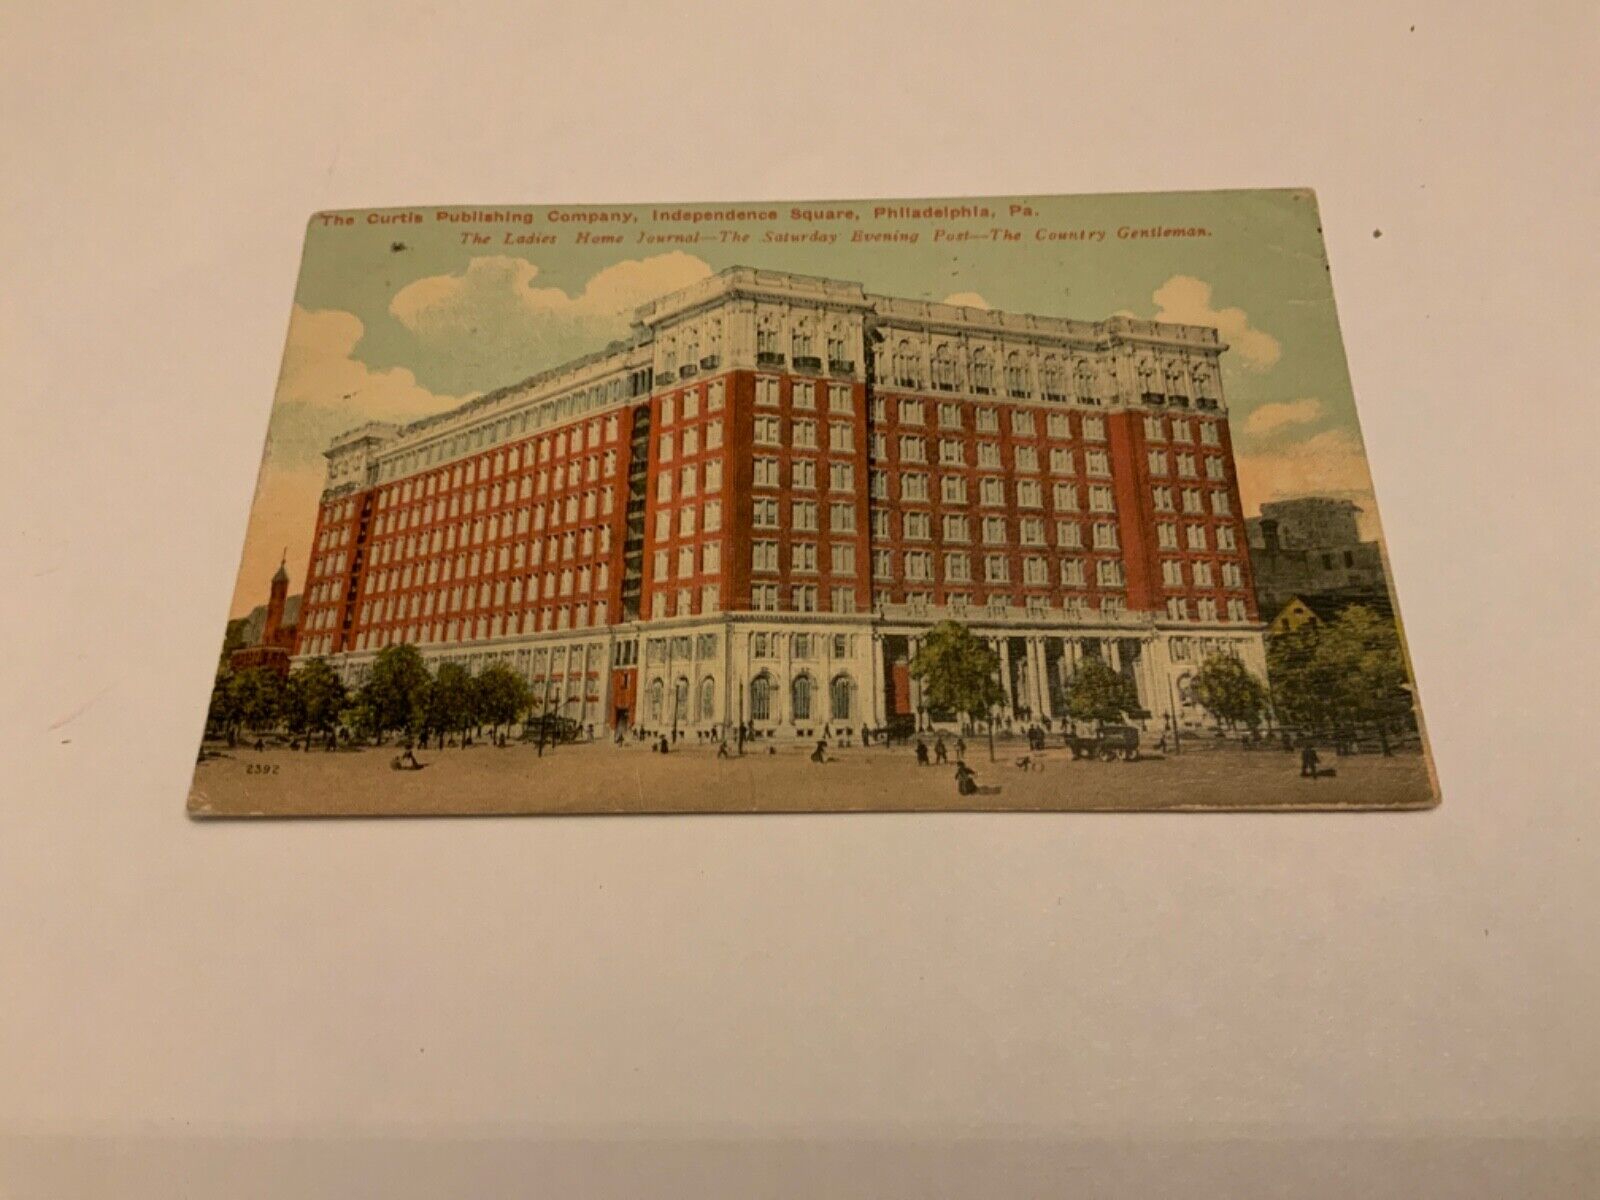 Philadelphia, Pa. ~ Curtis Publishing Co. -Independence Square- Antique Postcard